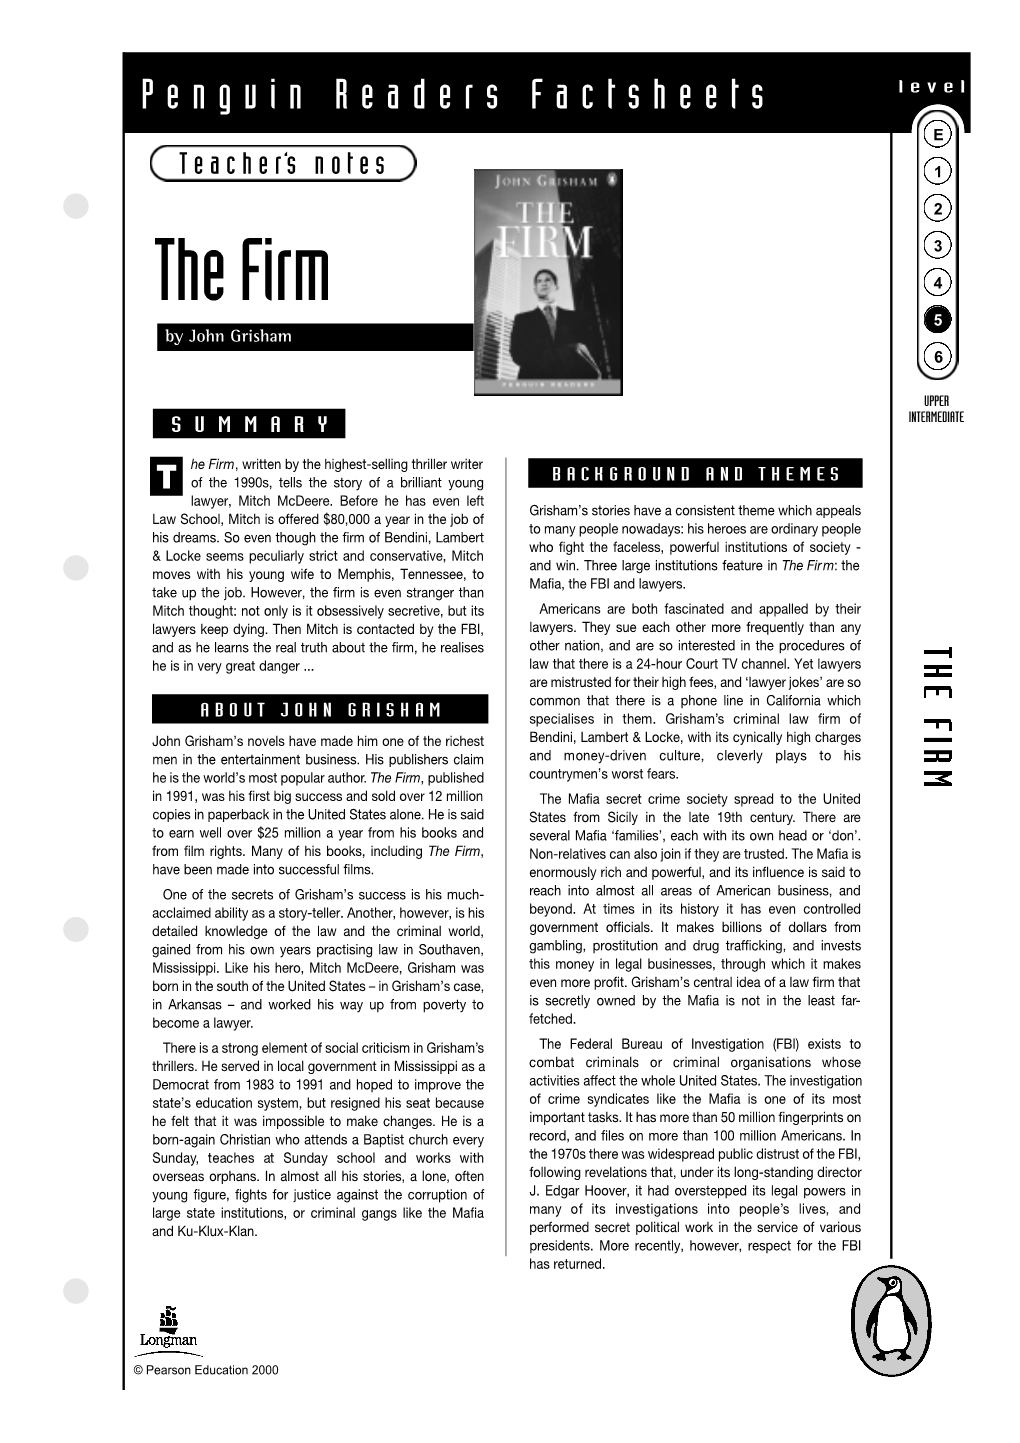 The Firm 4 5 by John Grisham 6